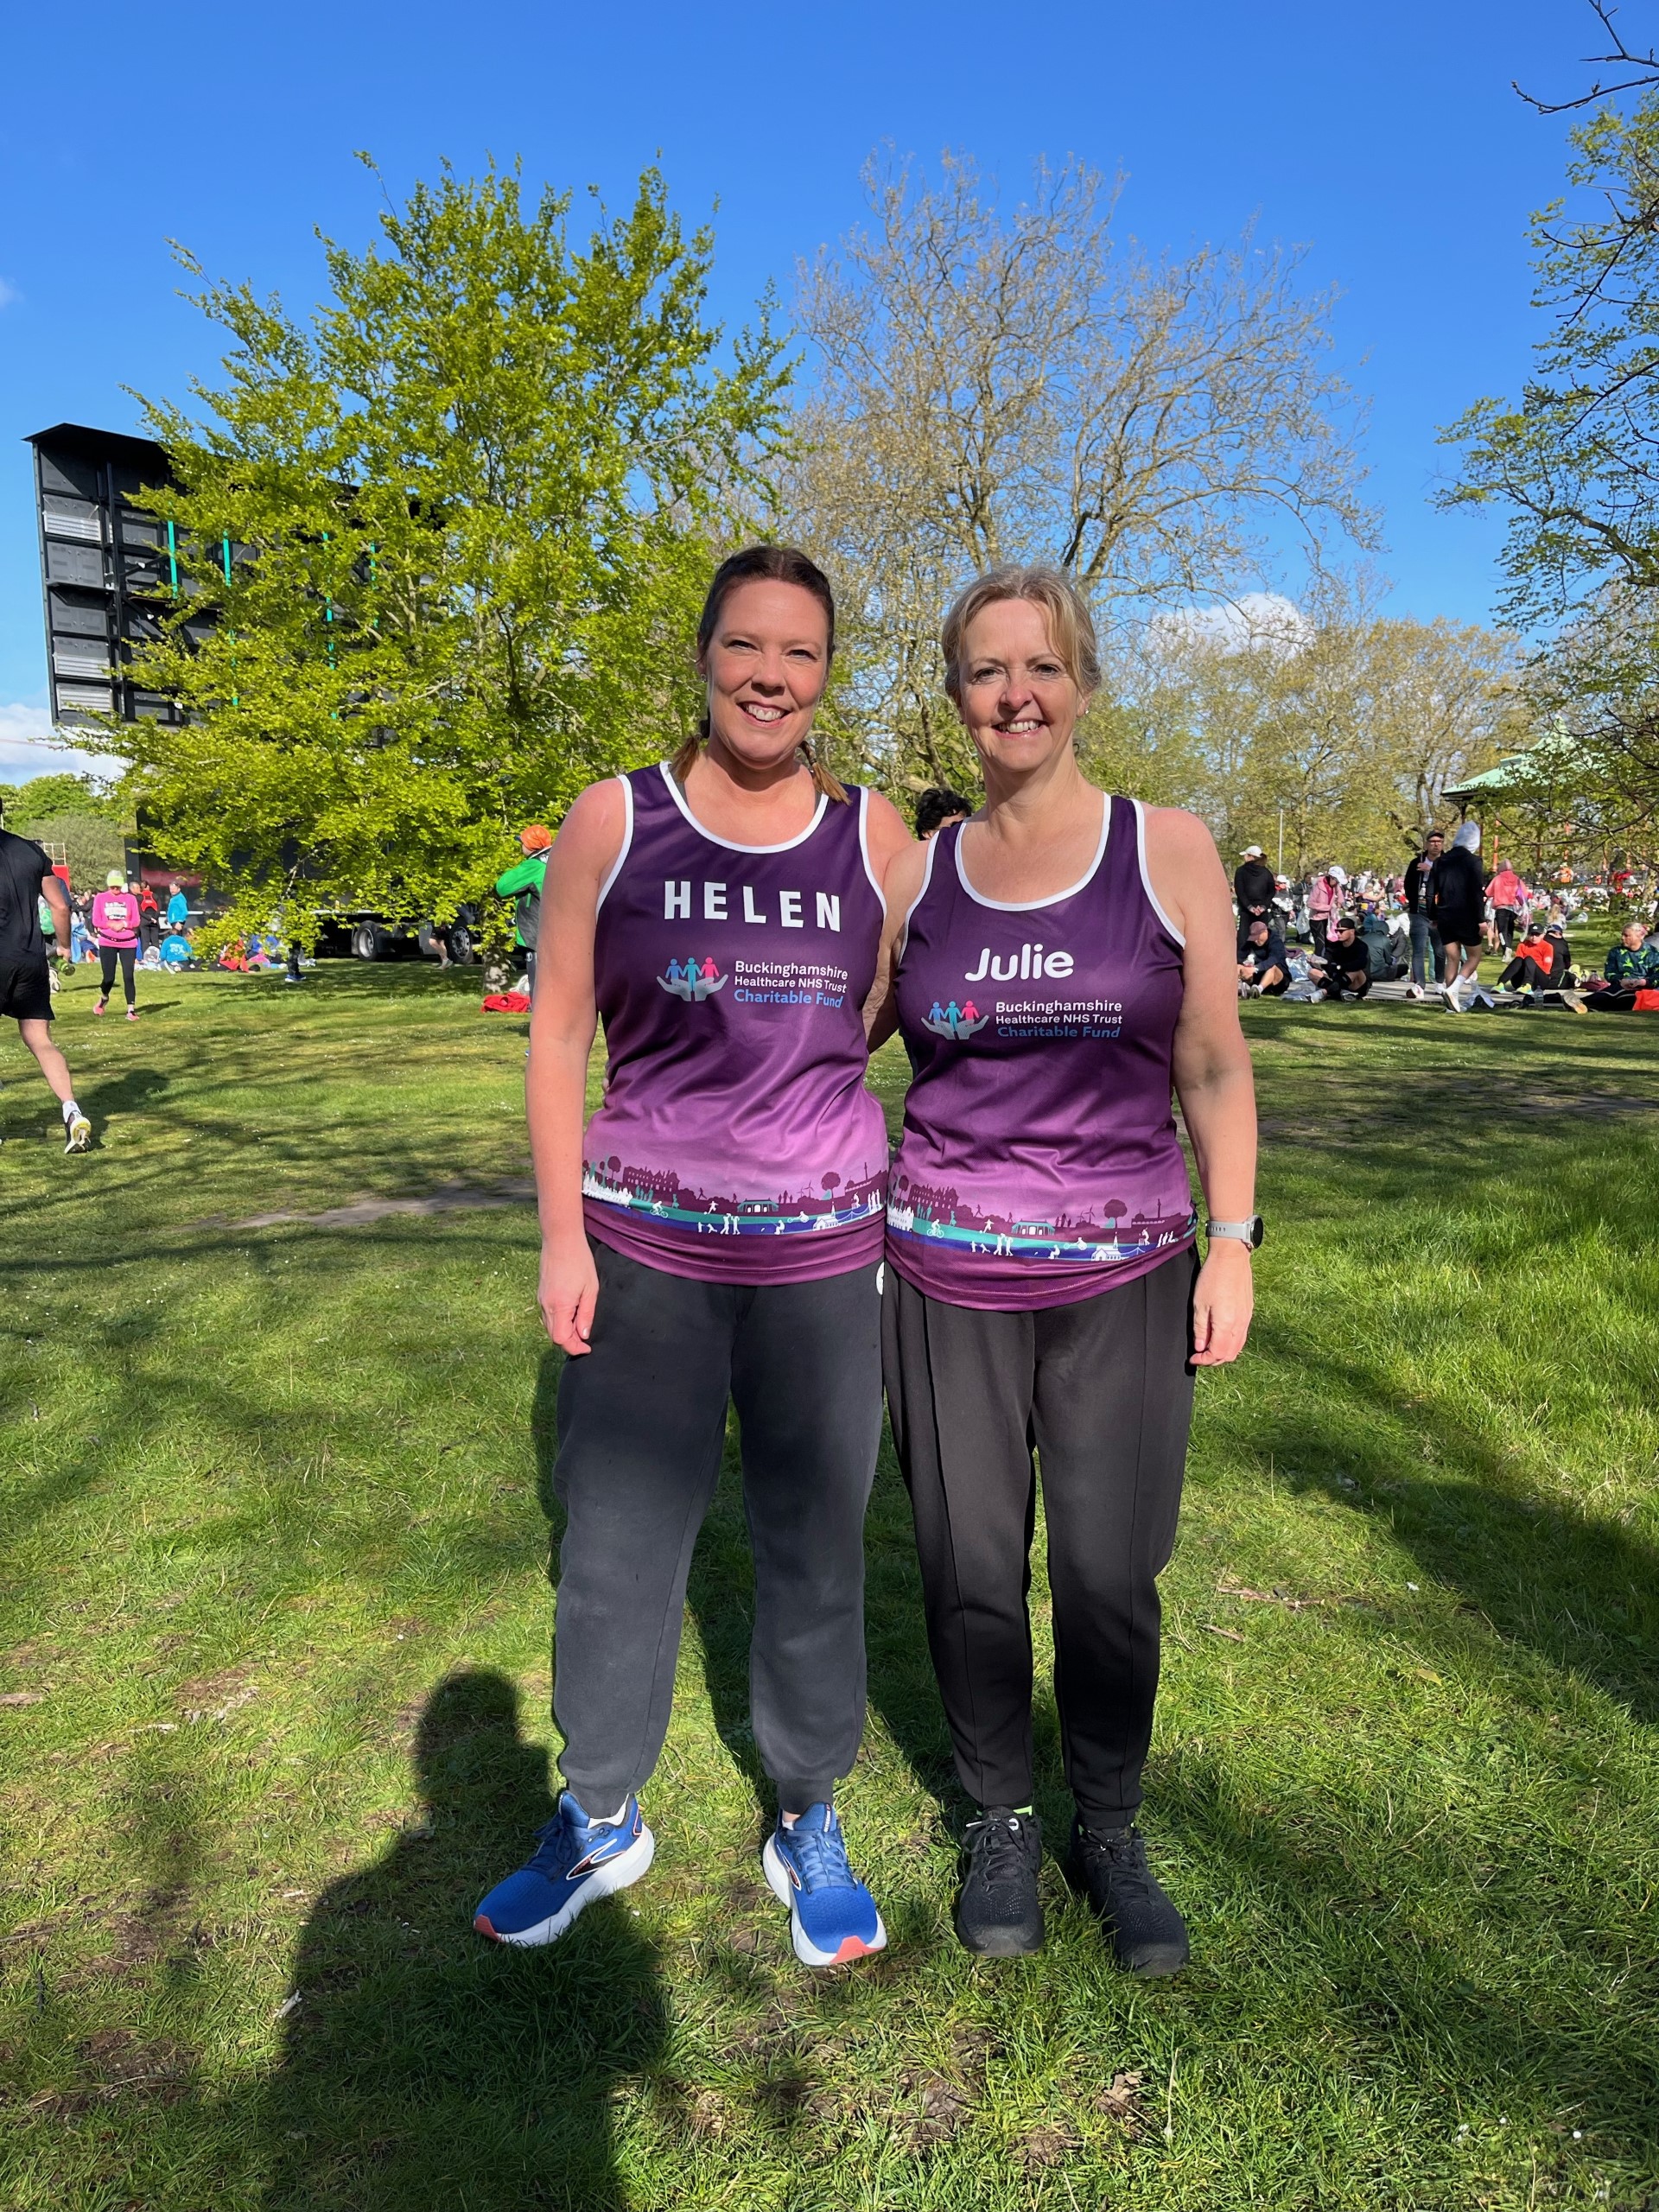 Helen and Julie wearing their purple Buckinghamshire Healthcare NHS Trust Charitable Fund running vest